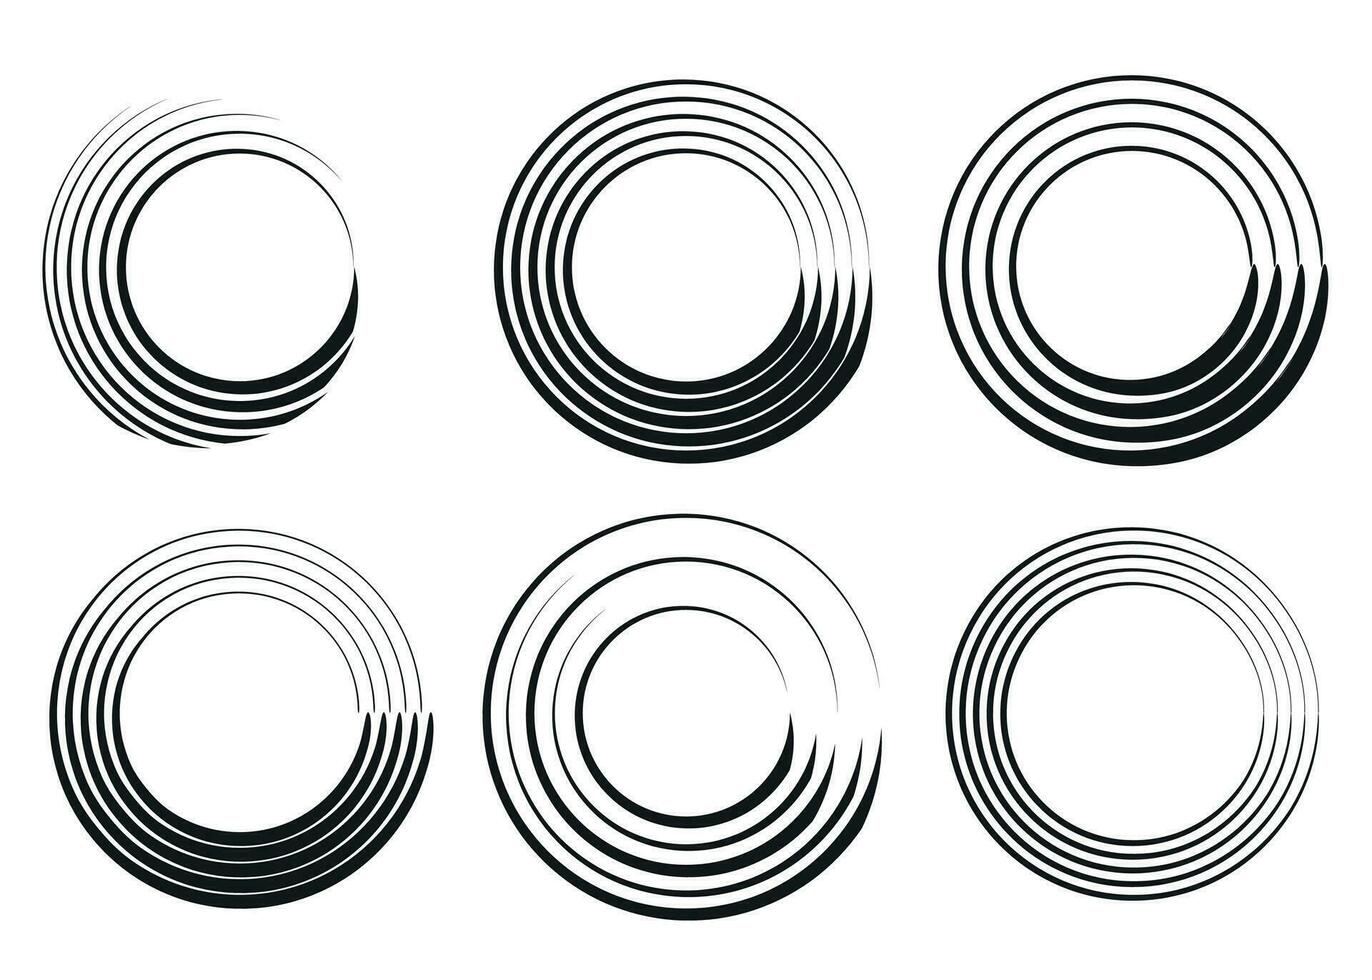 Enso zen stroke circle japanese brush symbol vector illustration.